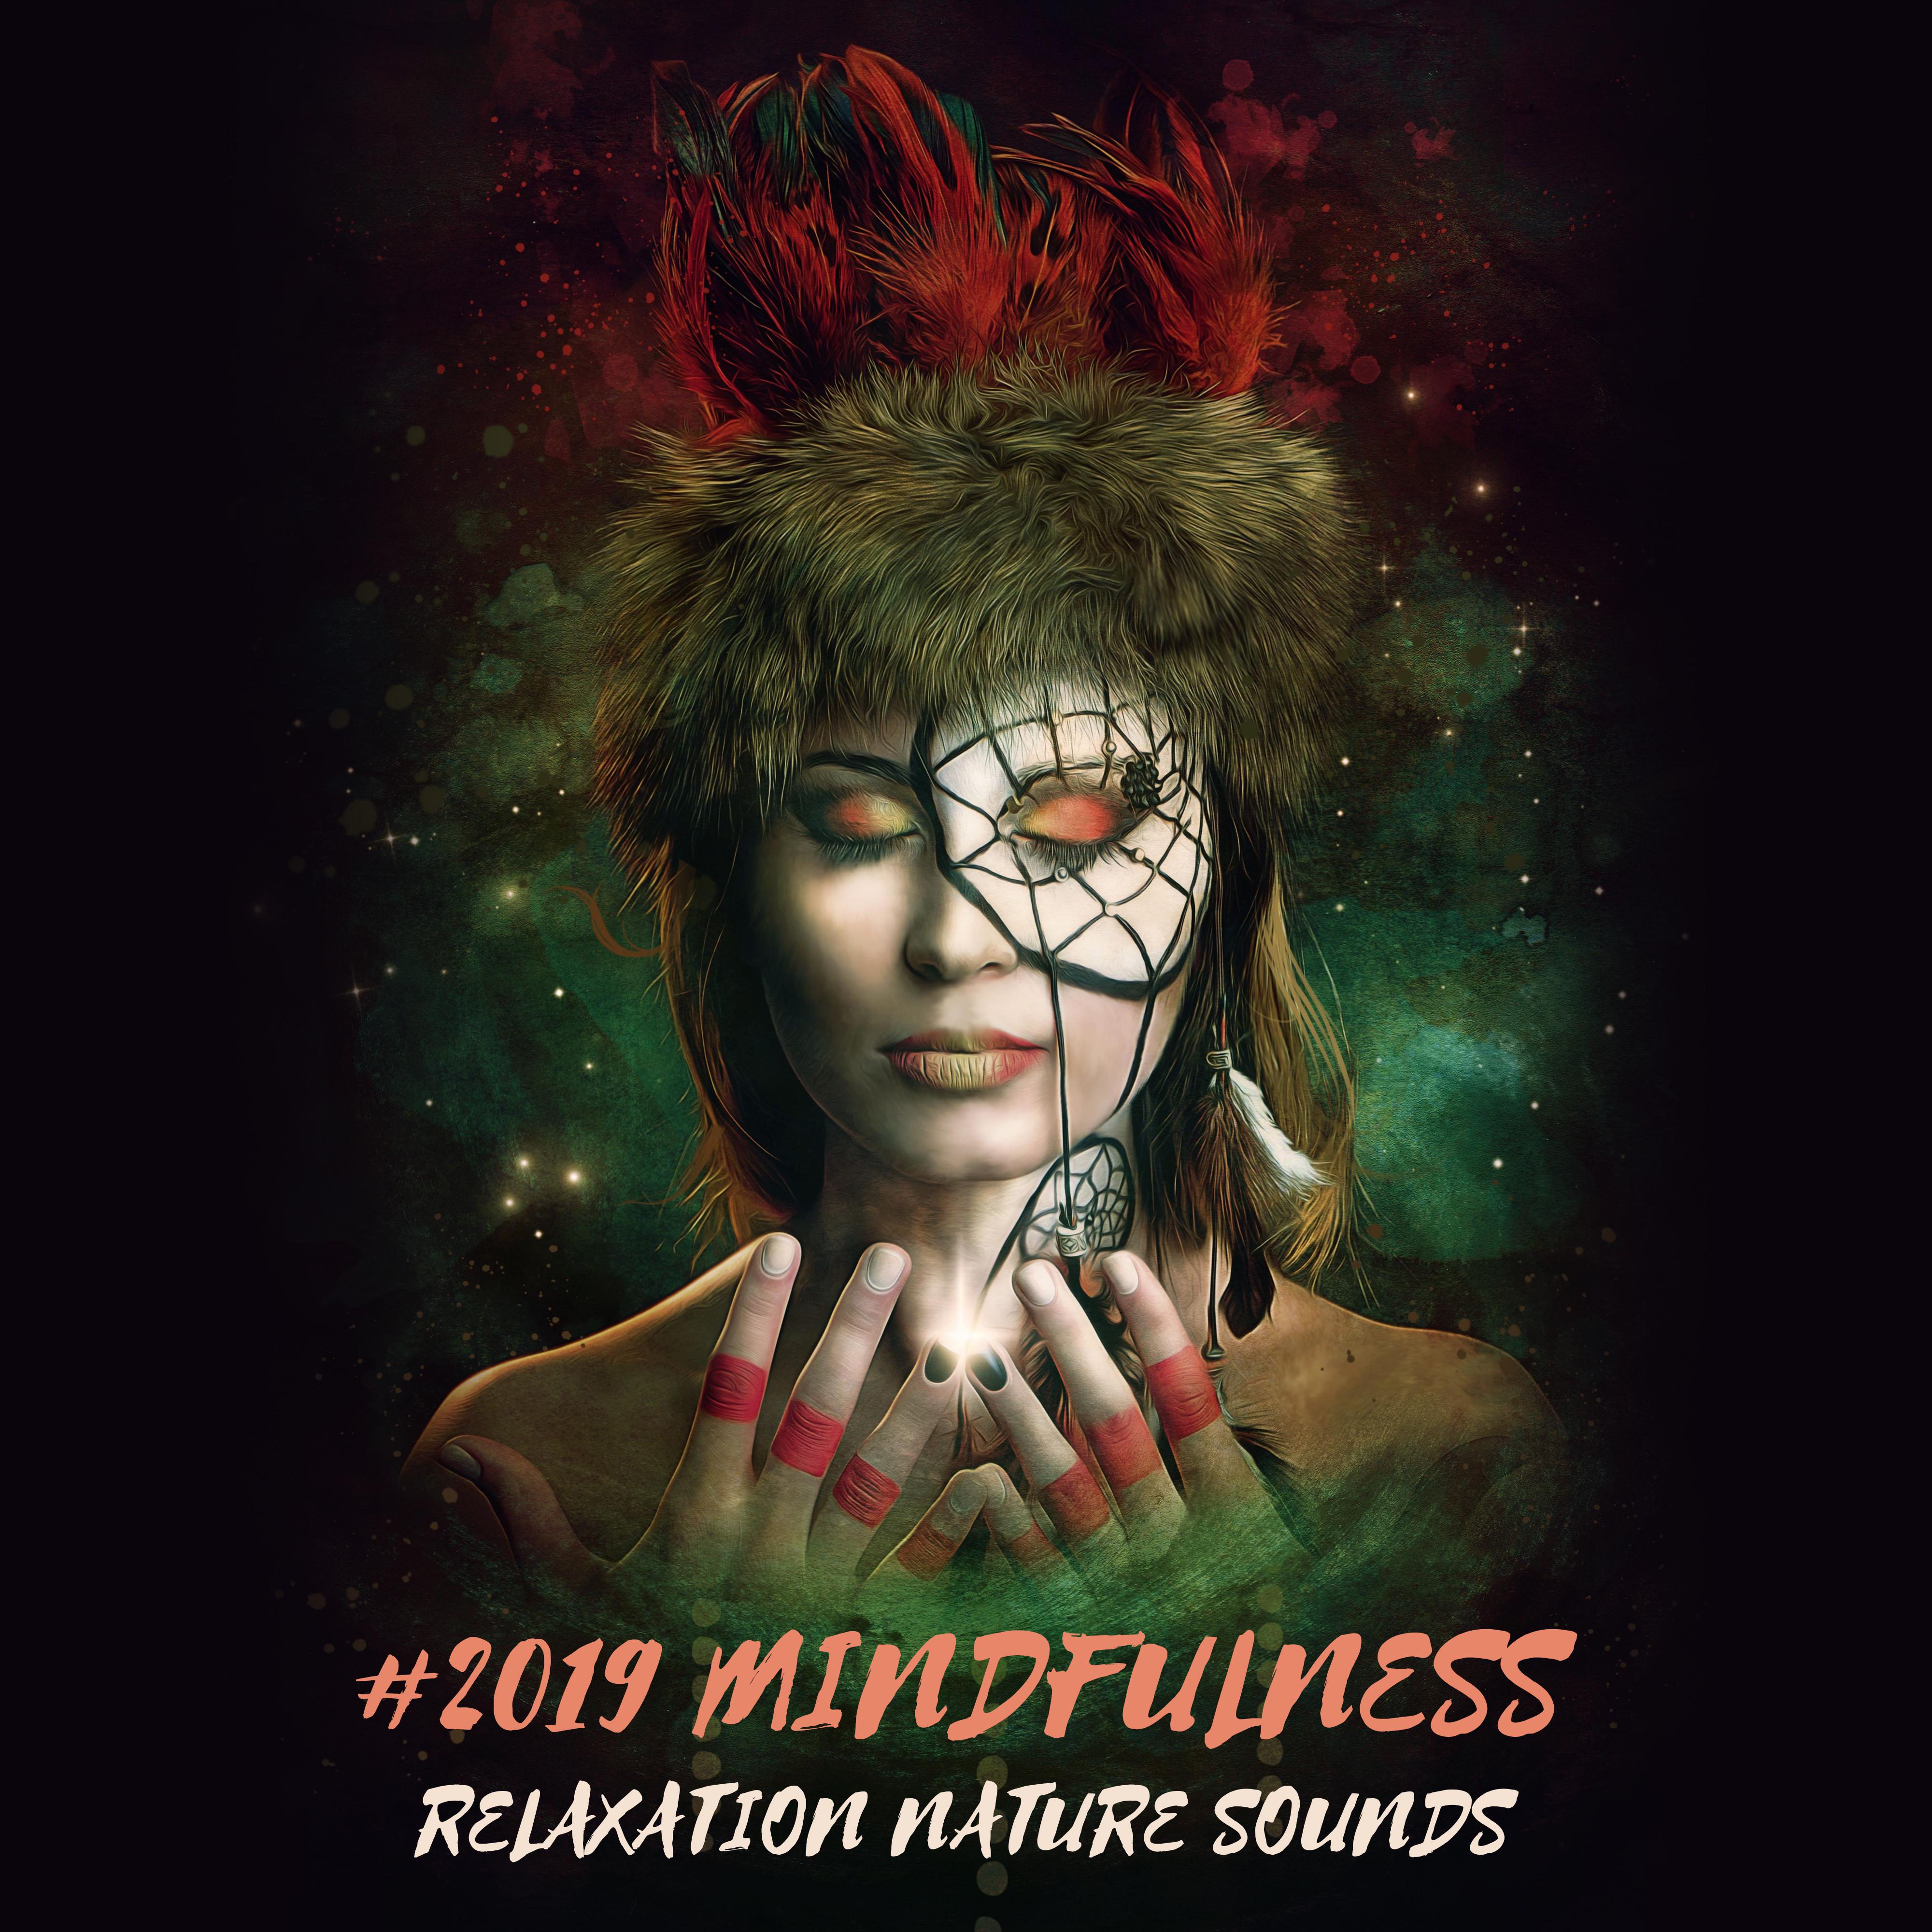 2019 Mindfulness Relaxation Nature Sounds  15 Relaxing Songs for Deep Meditation, Yoga Training, Inner Balance, Spiritual Awakening, Zen